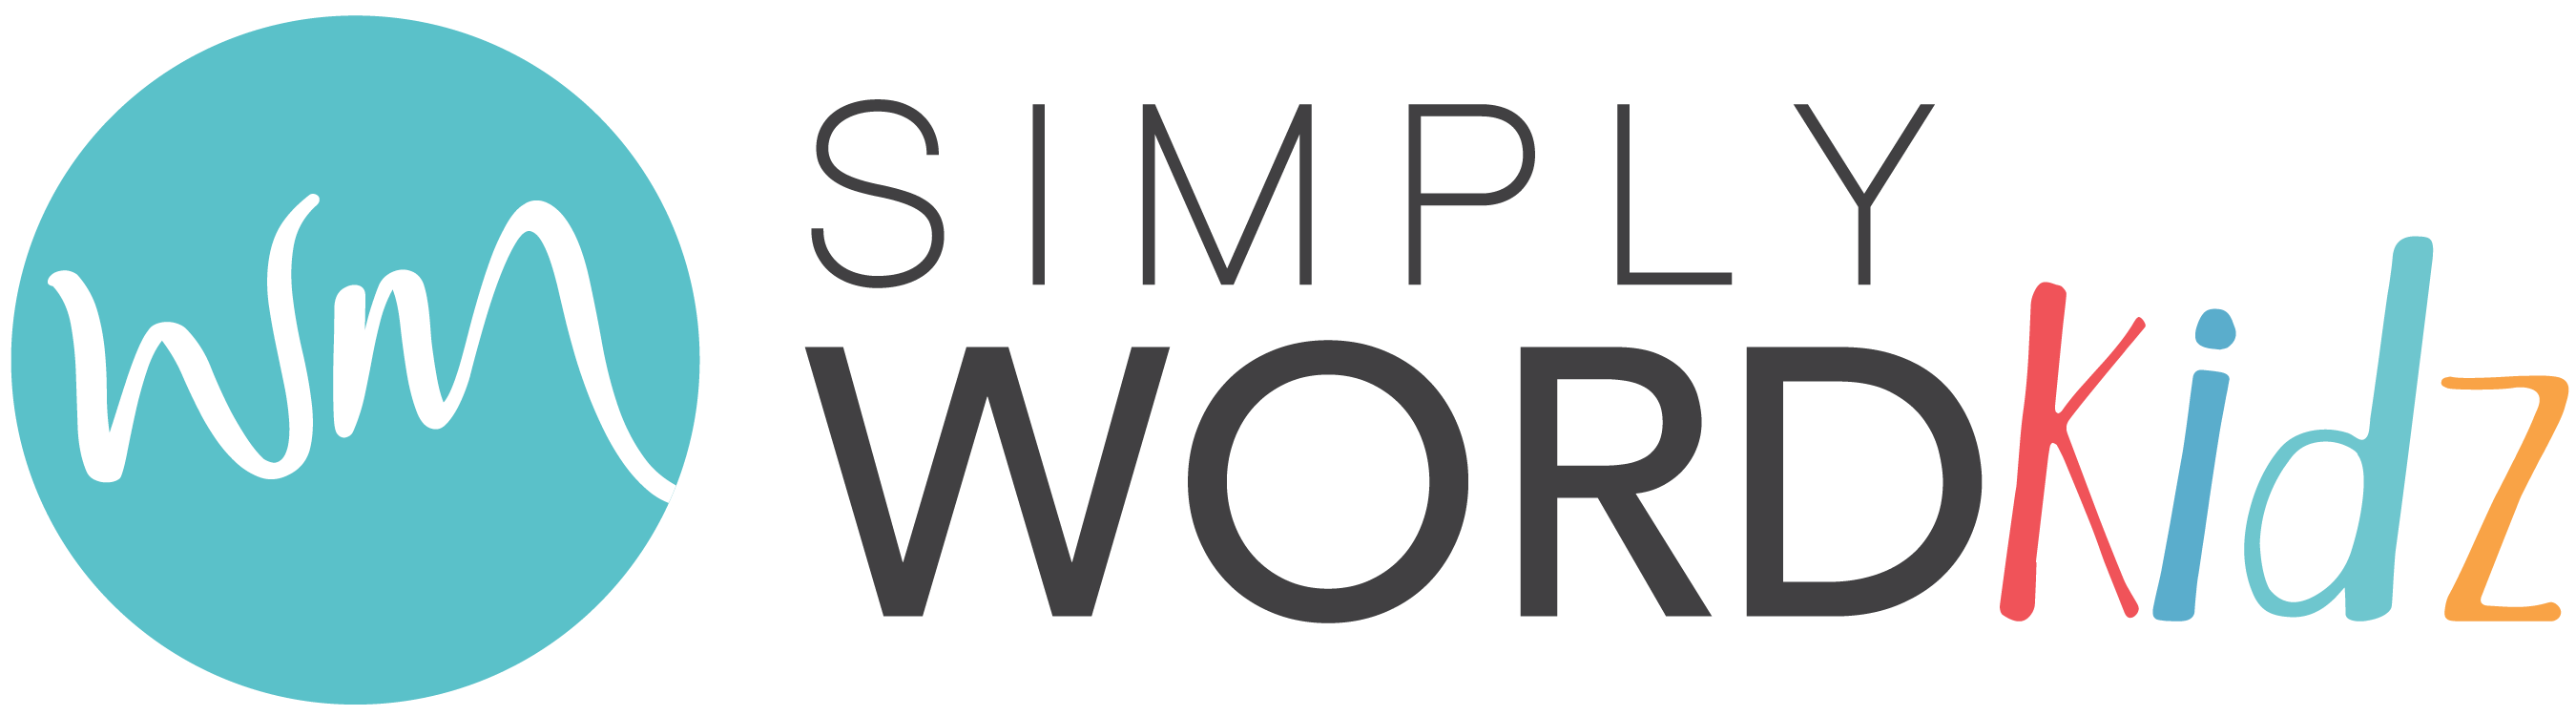 Simply WordKidz Logo.jpg